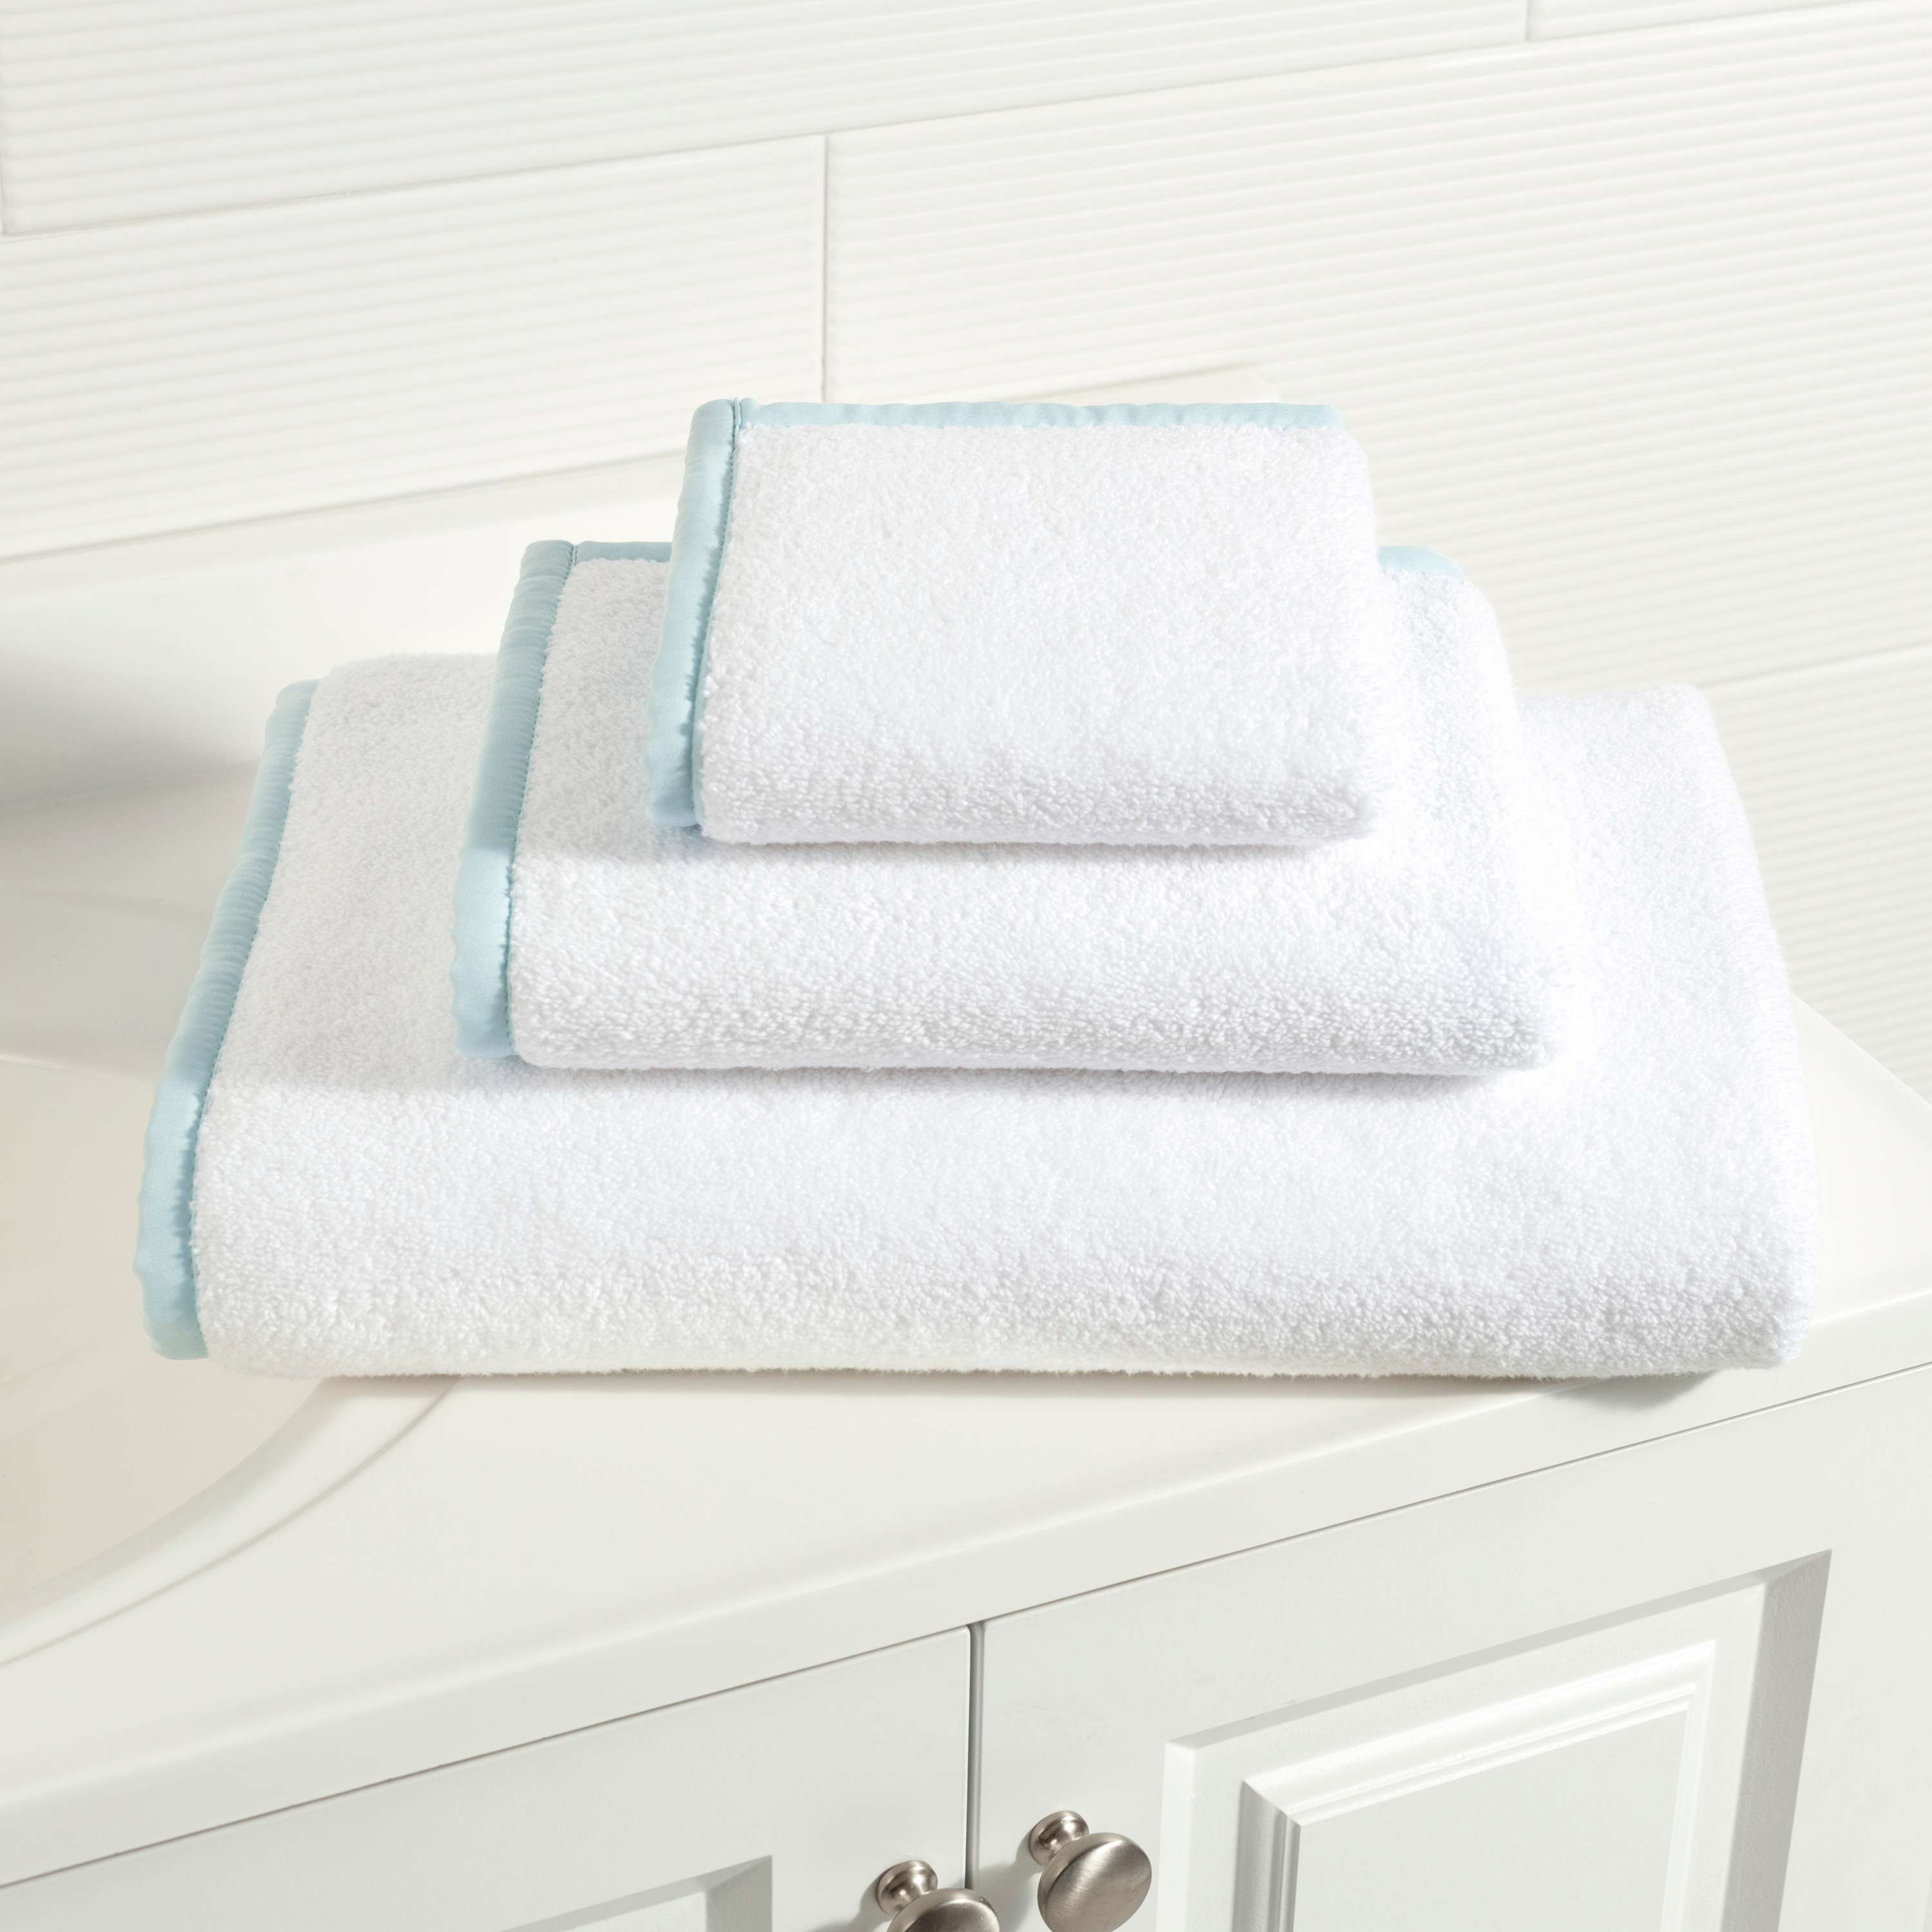 Chulmleigh 6 Piece Turkish Cotton Towel Set Ebern Designs Color: White